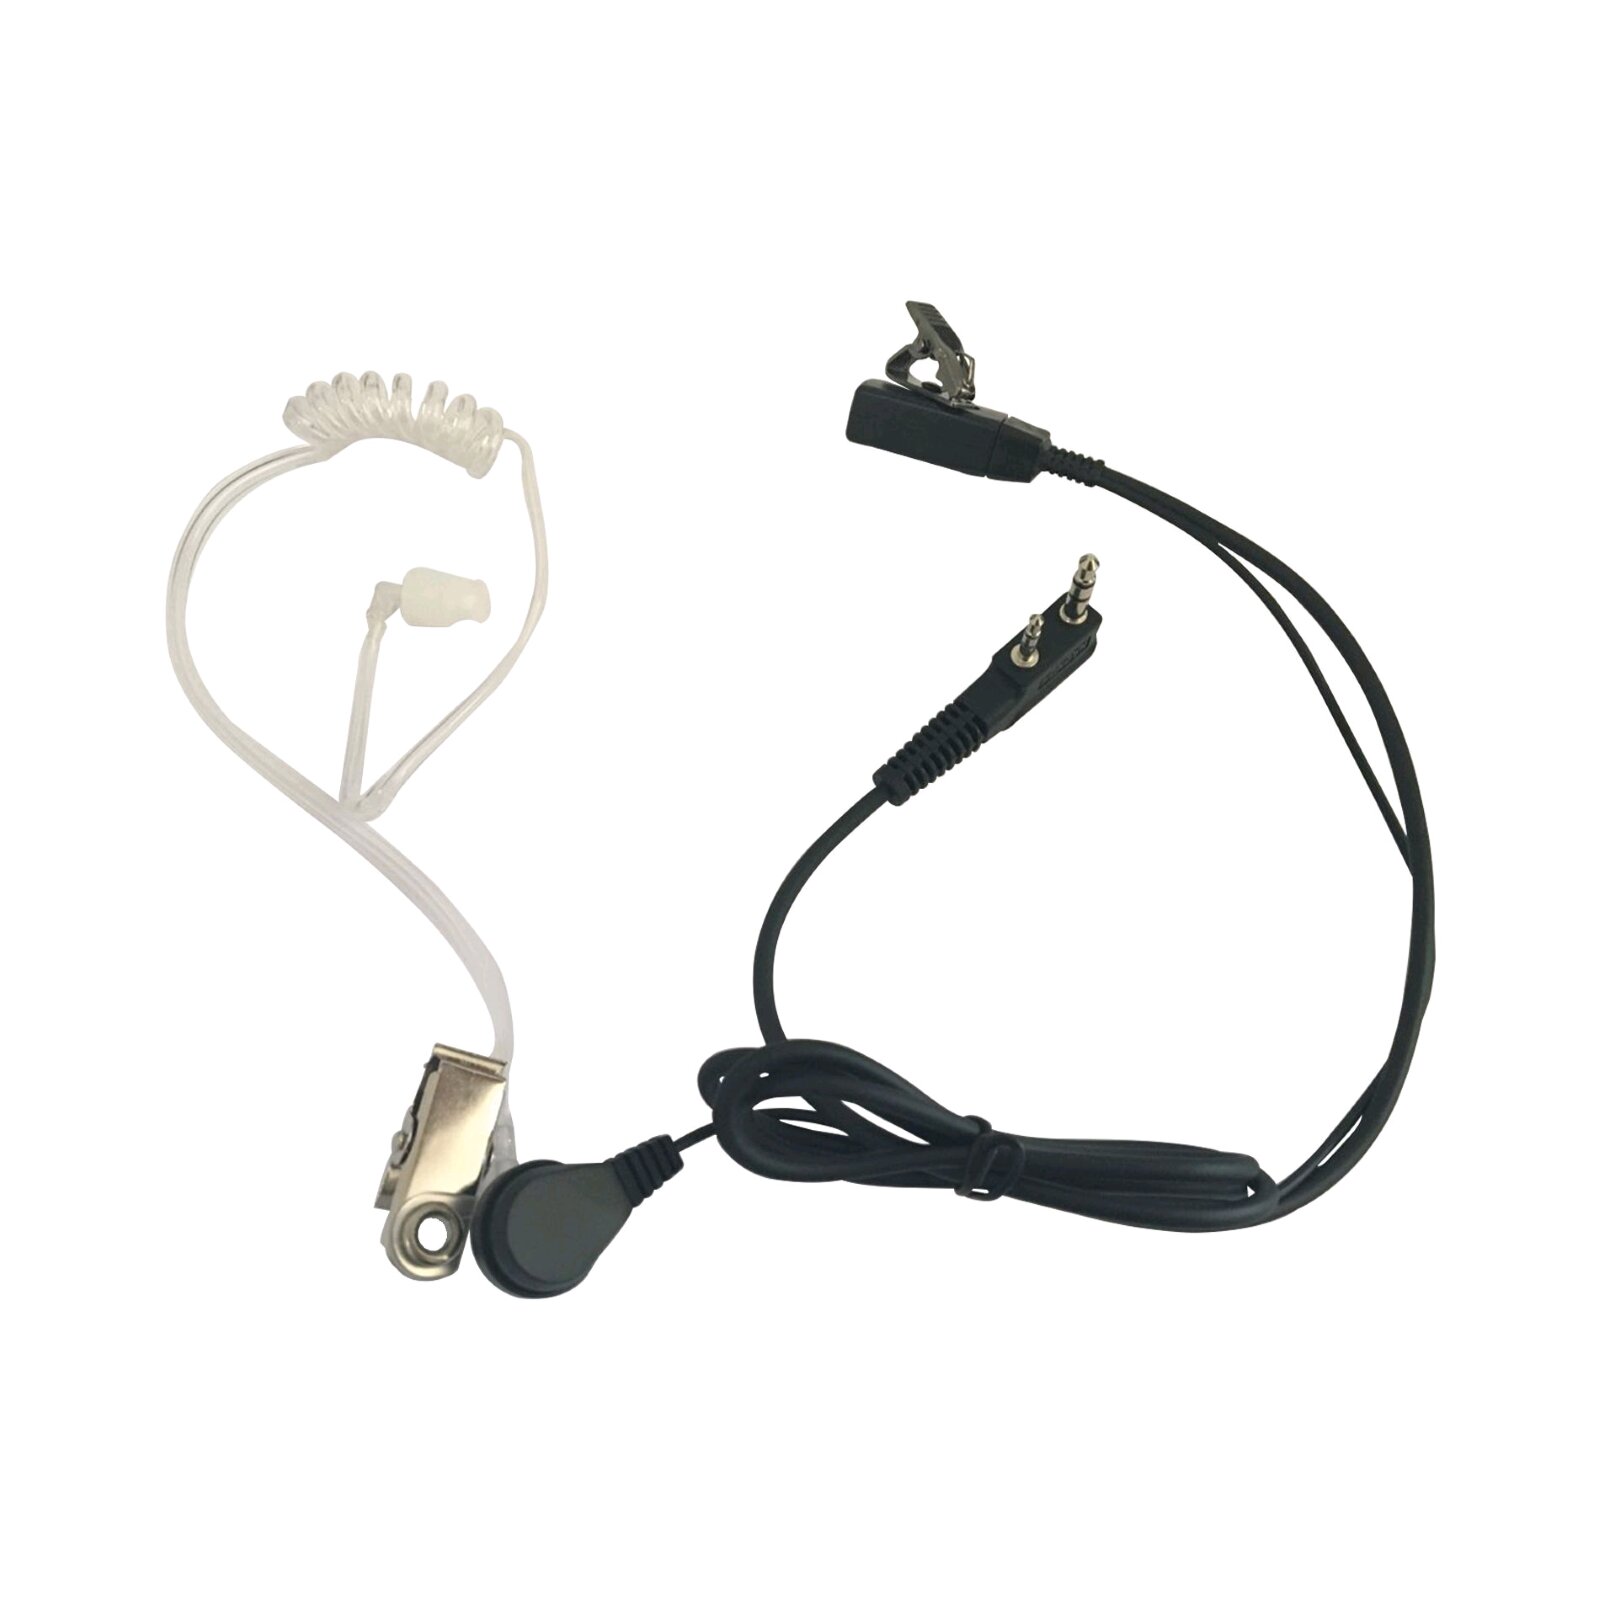 Power Acoustics In-Ear Headphone for Walkie Talkie (HS 07) : photo 1